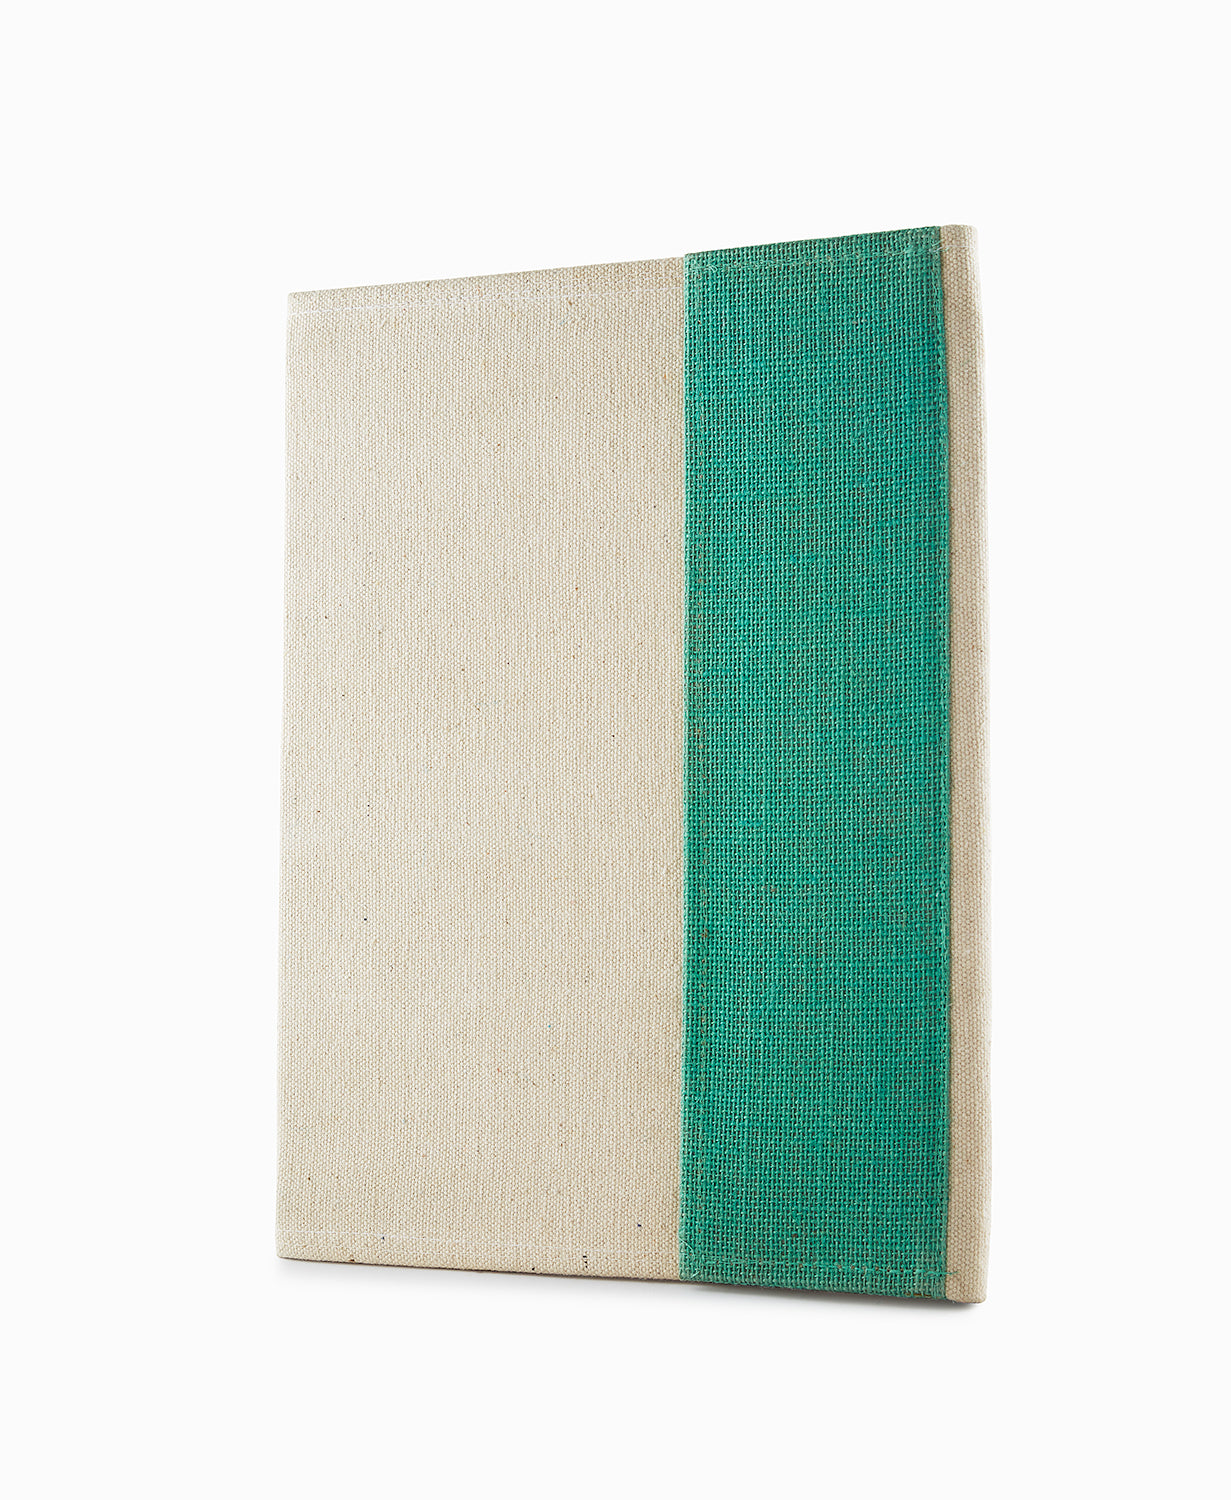 White & Mint Green - Canvas Folder